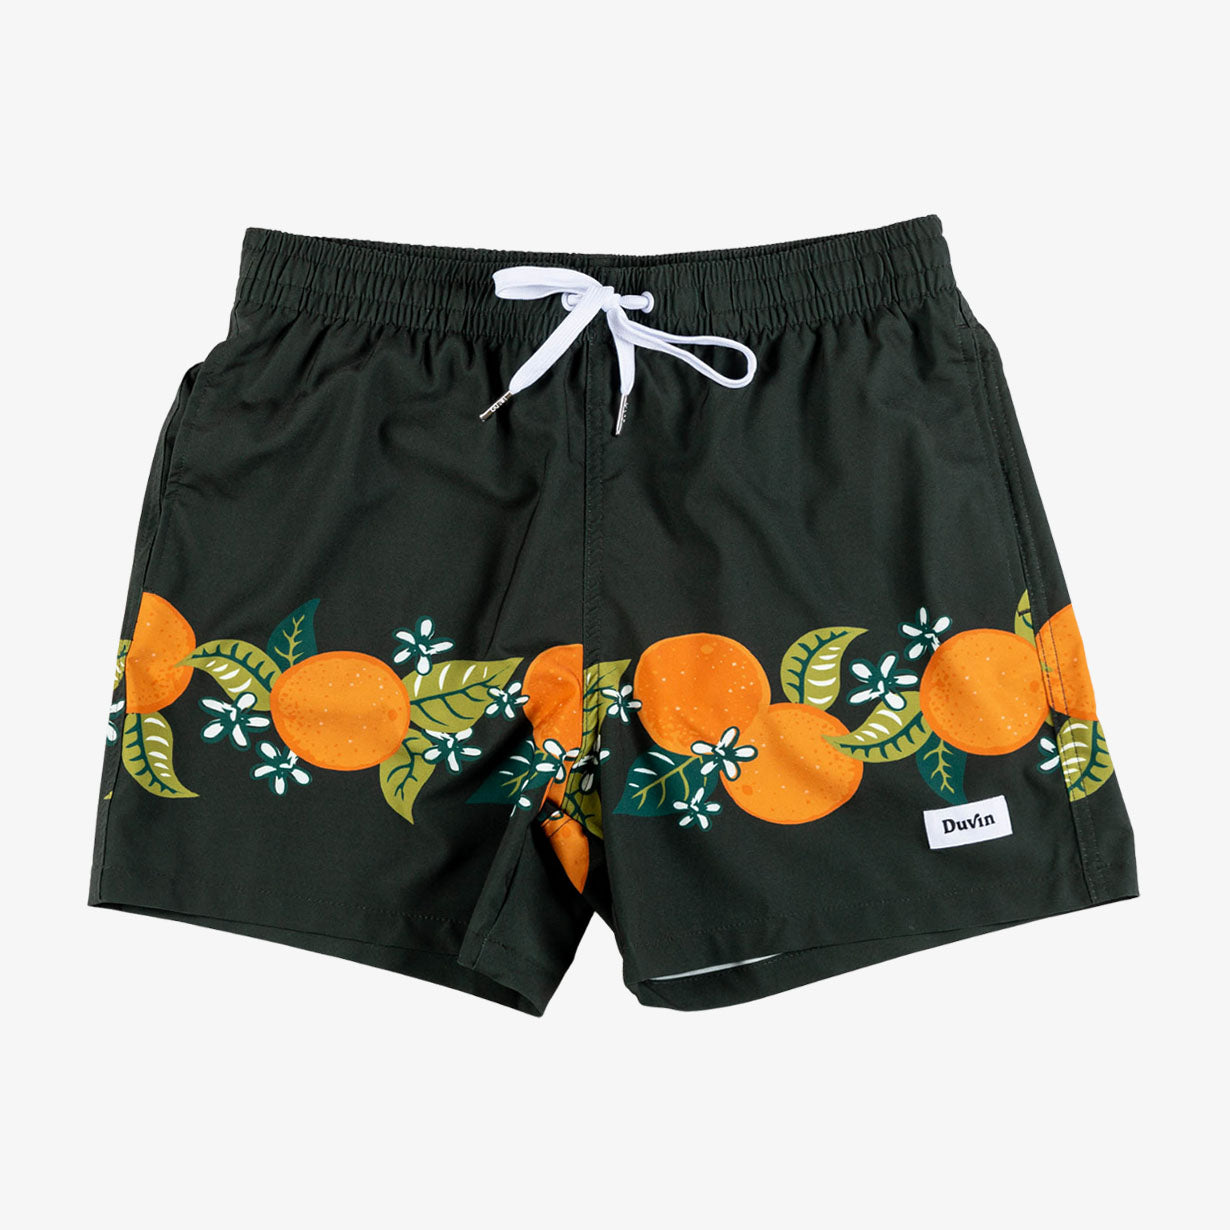 Ostuni Watercolor swim shorts